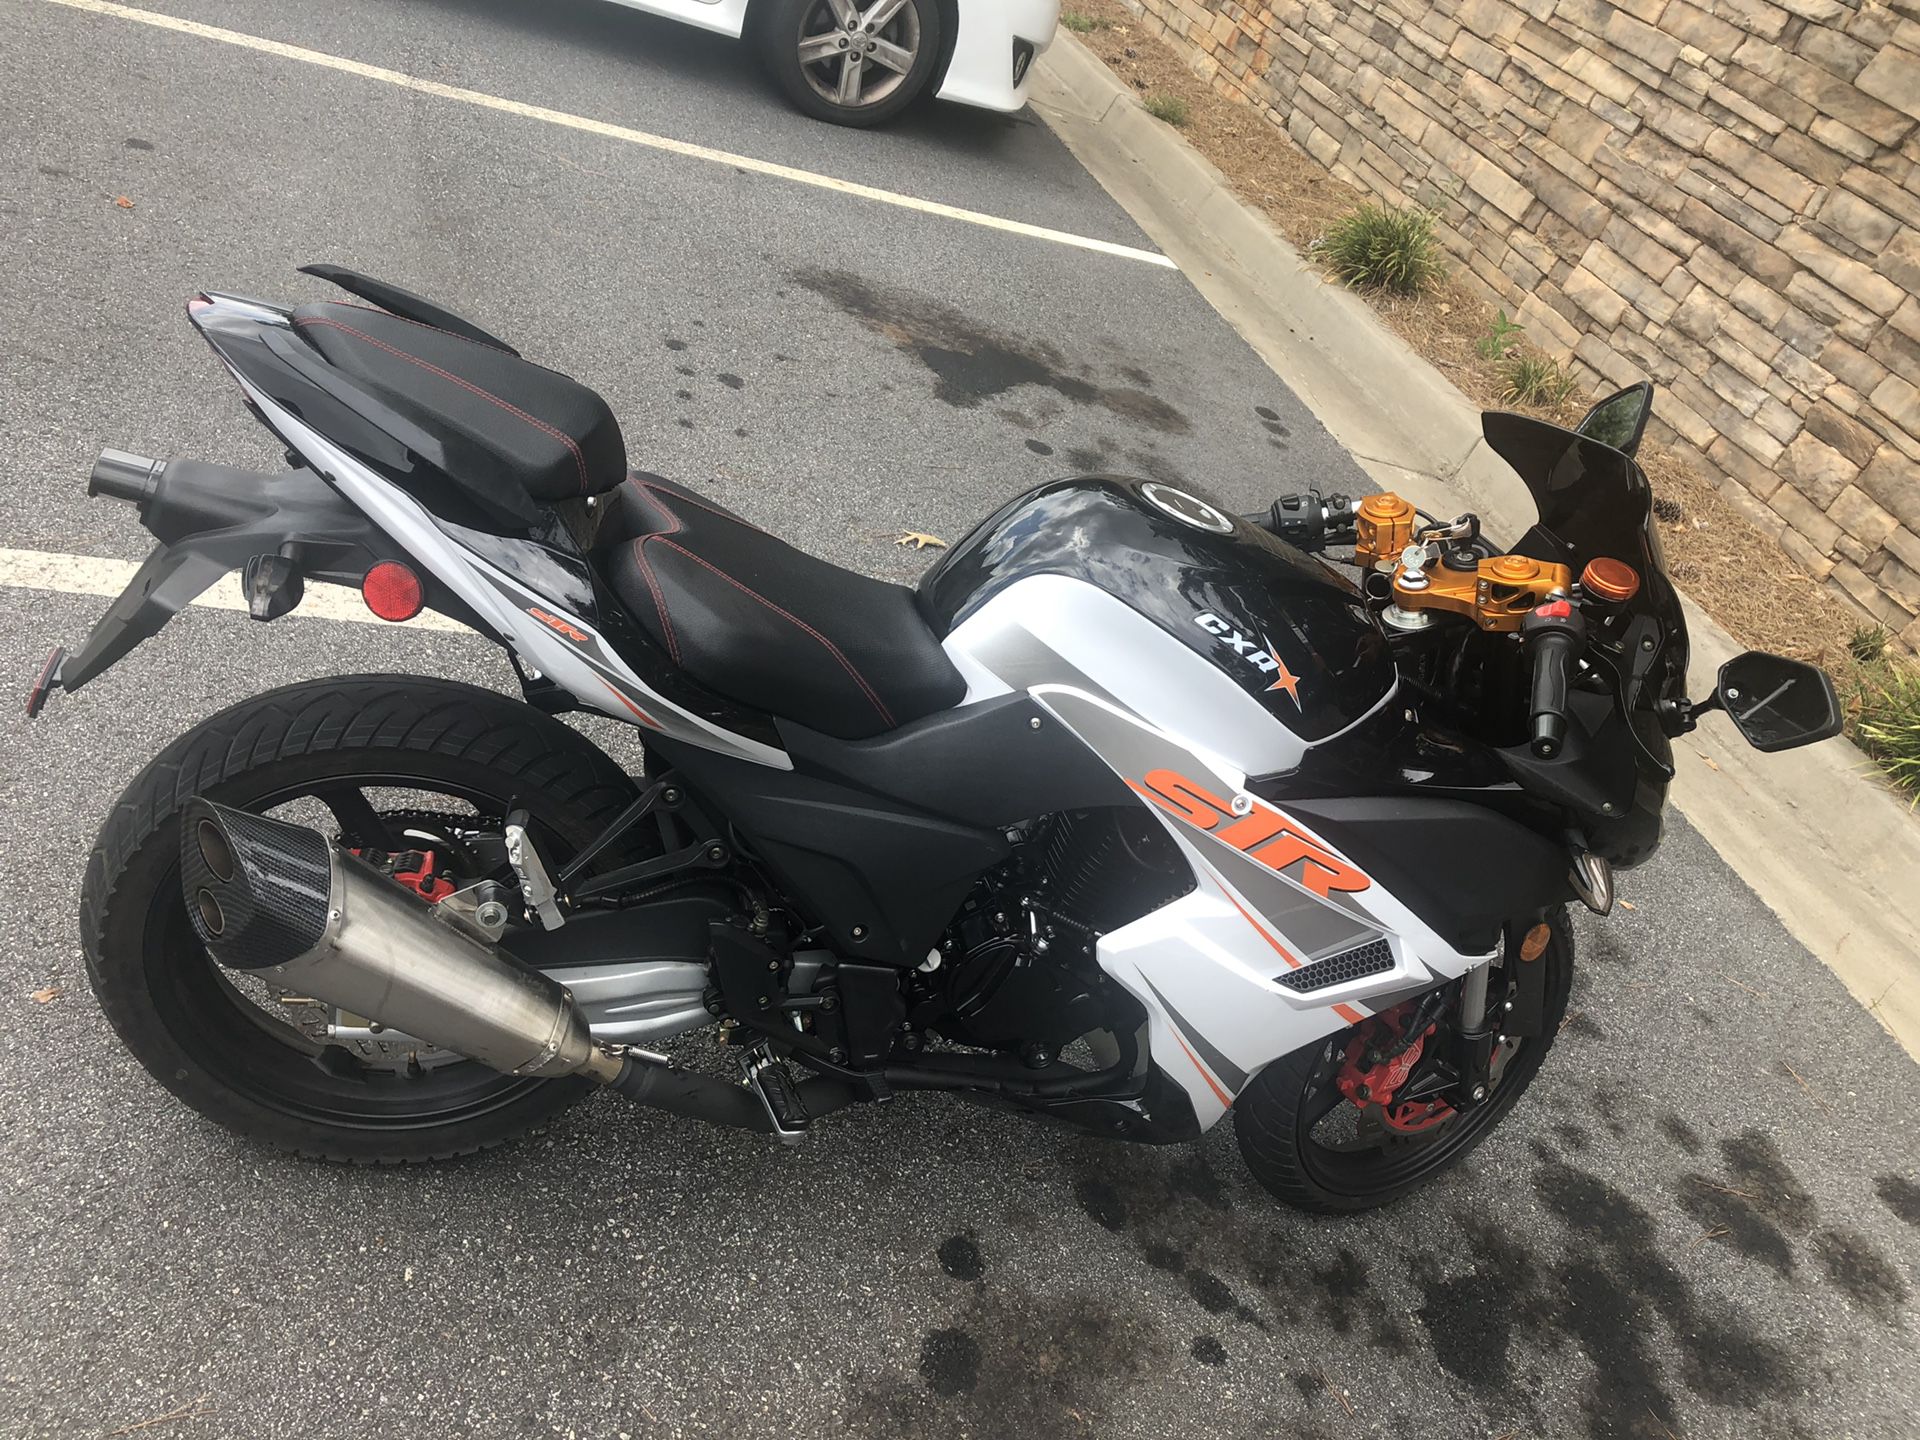 Motorcycle 2018 cxr 250cc 300 miles